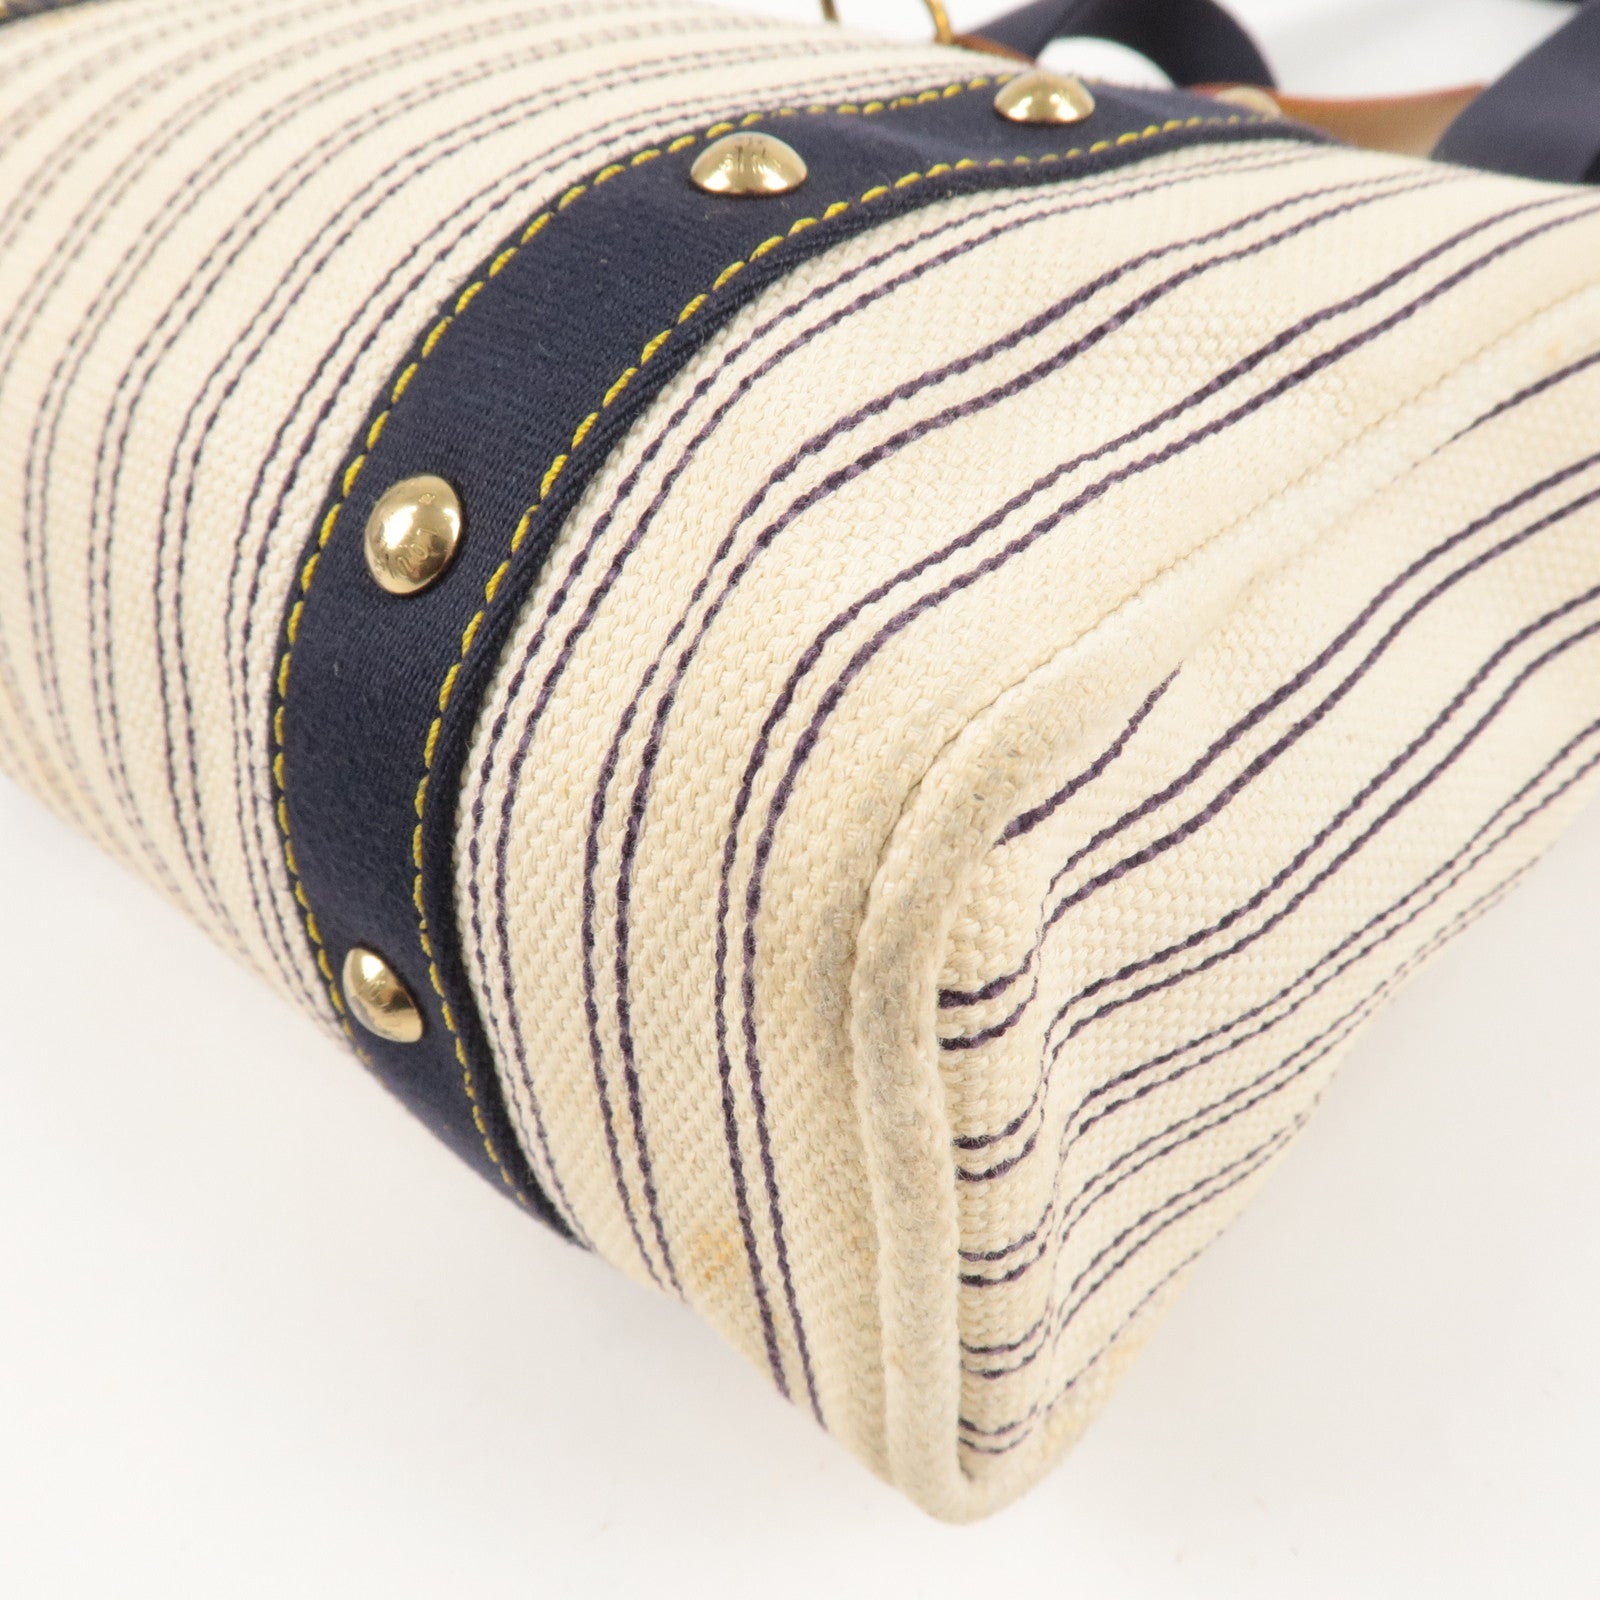 Louis-Vuitton-Antigua-Cabas-MM-Tote-Bag-Navy-Stripe-M40132 – dct